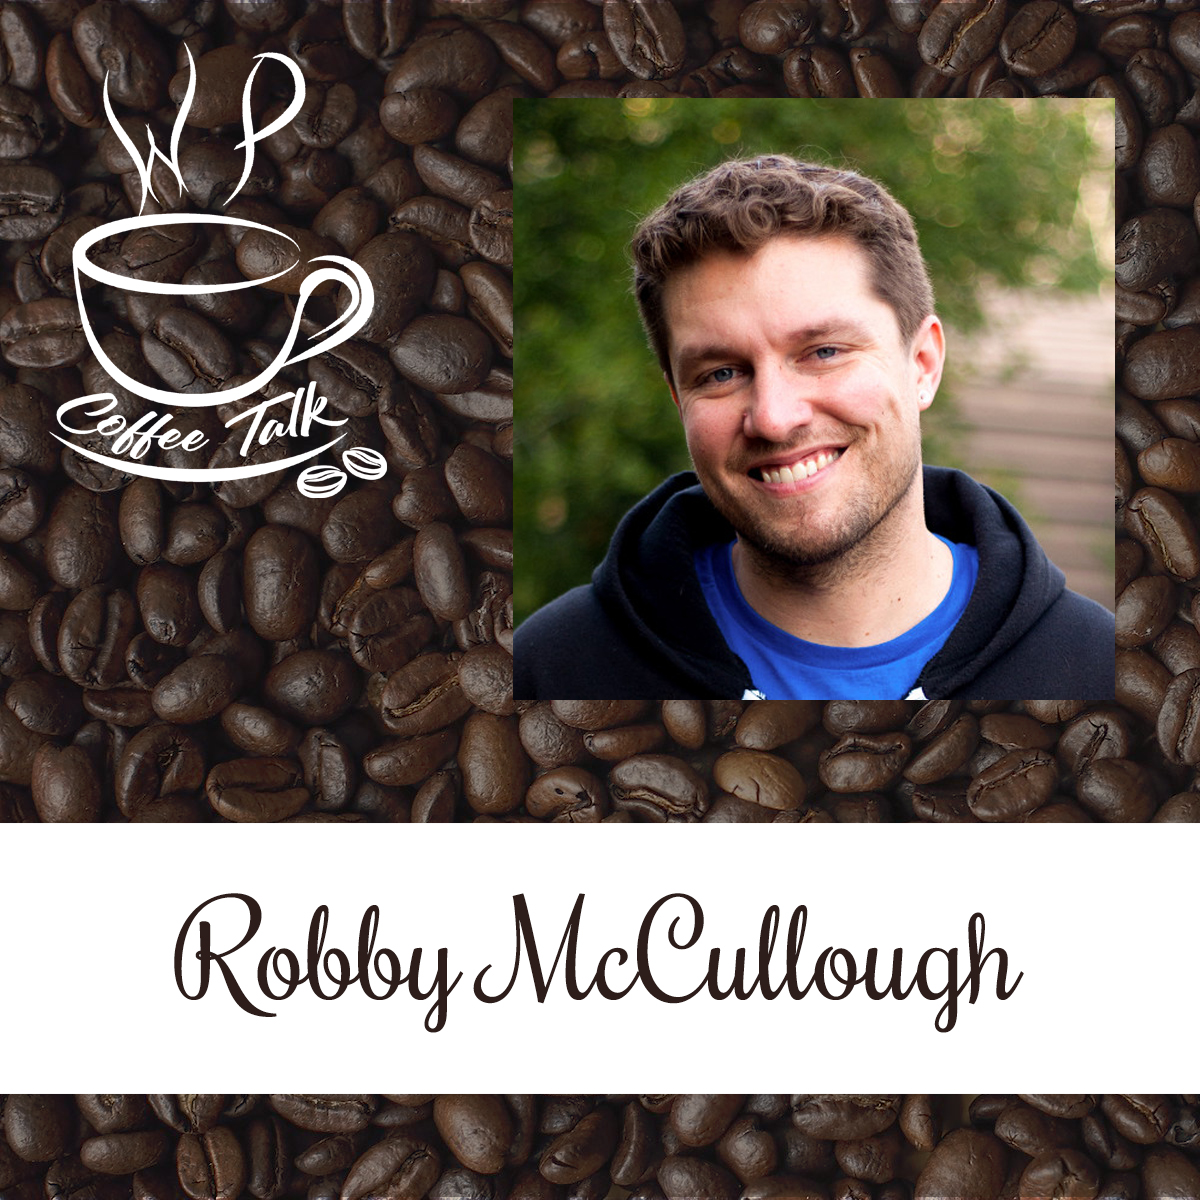 WPCoffeeTalk: Robby McCullough